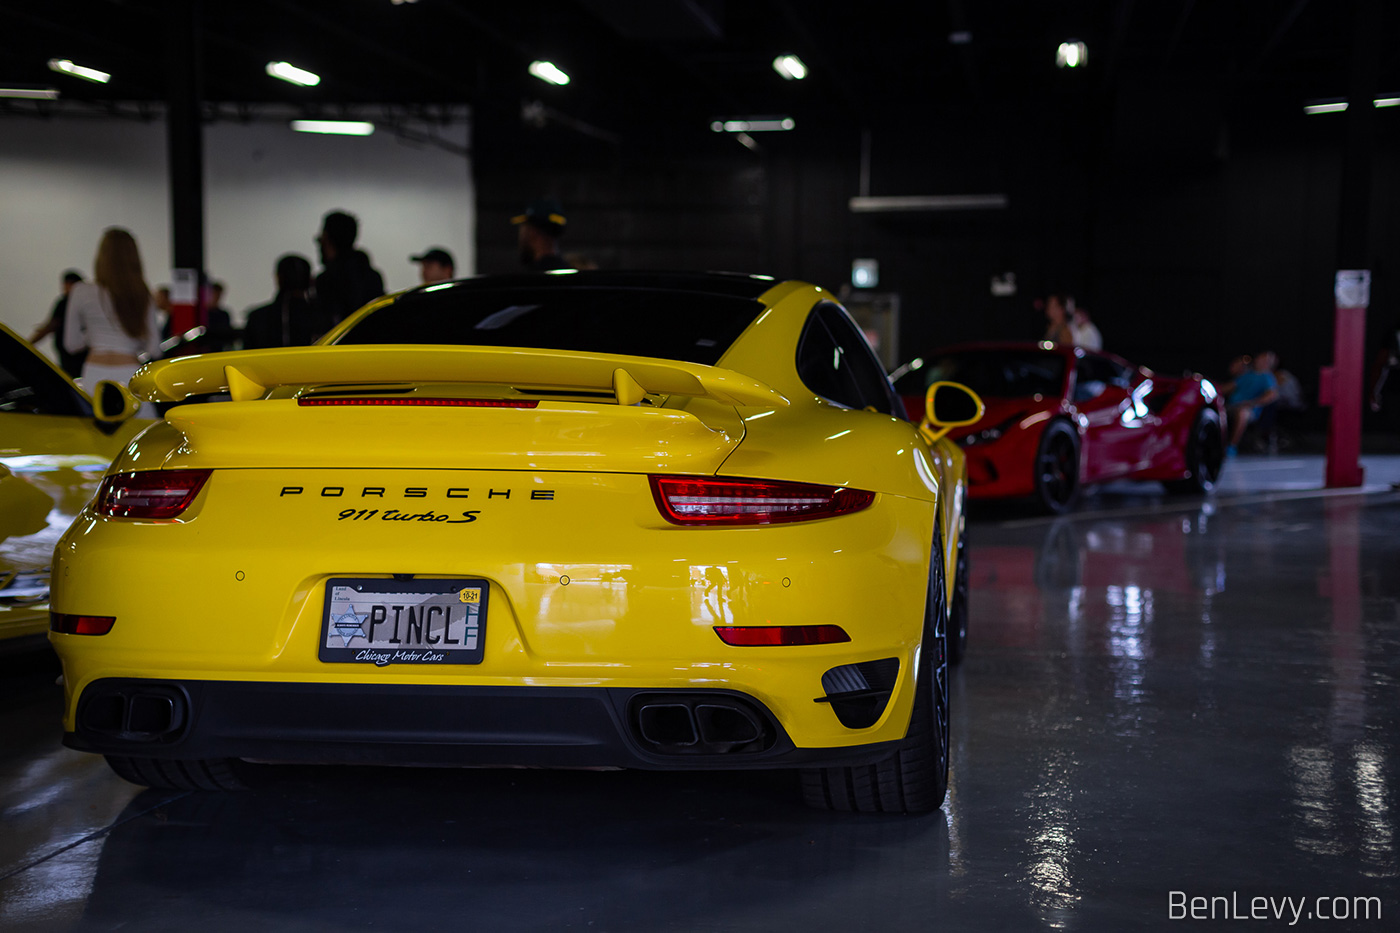 Rear of Yellow Porsche 911 Turbo S